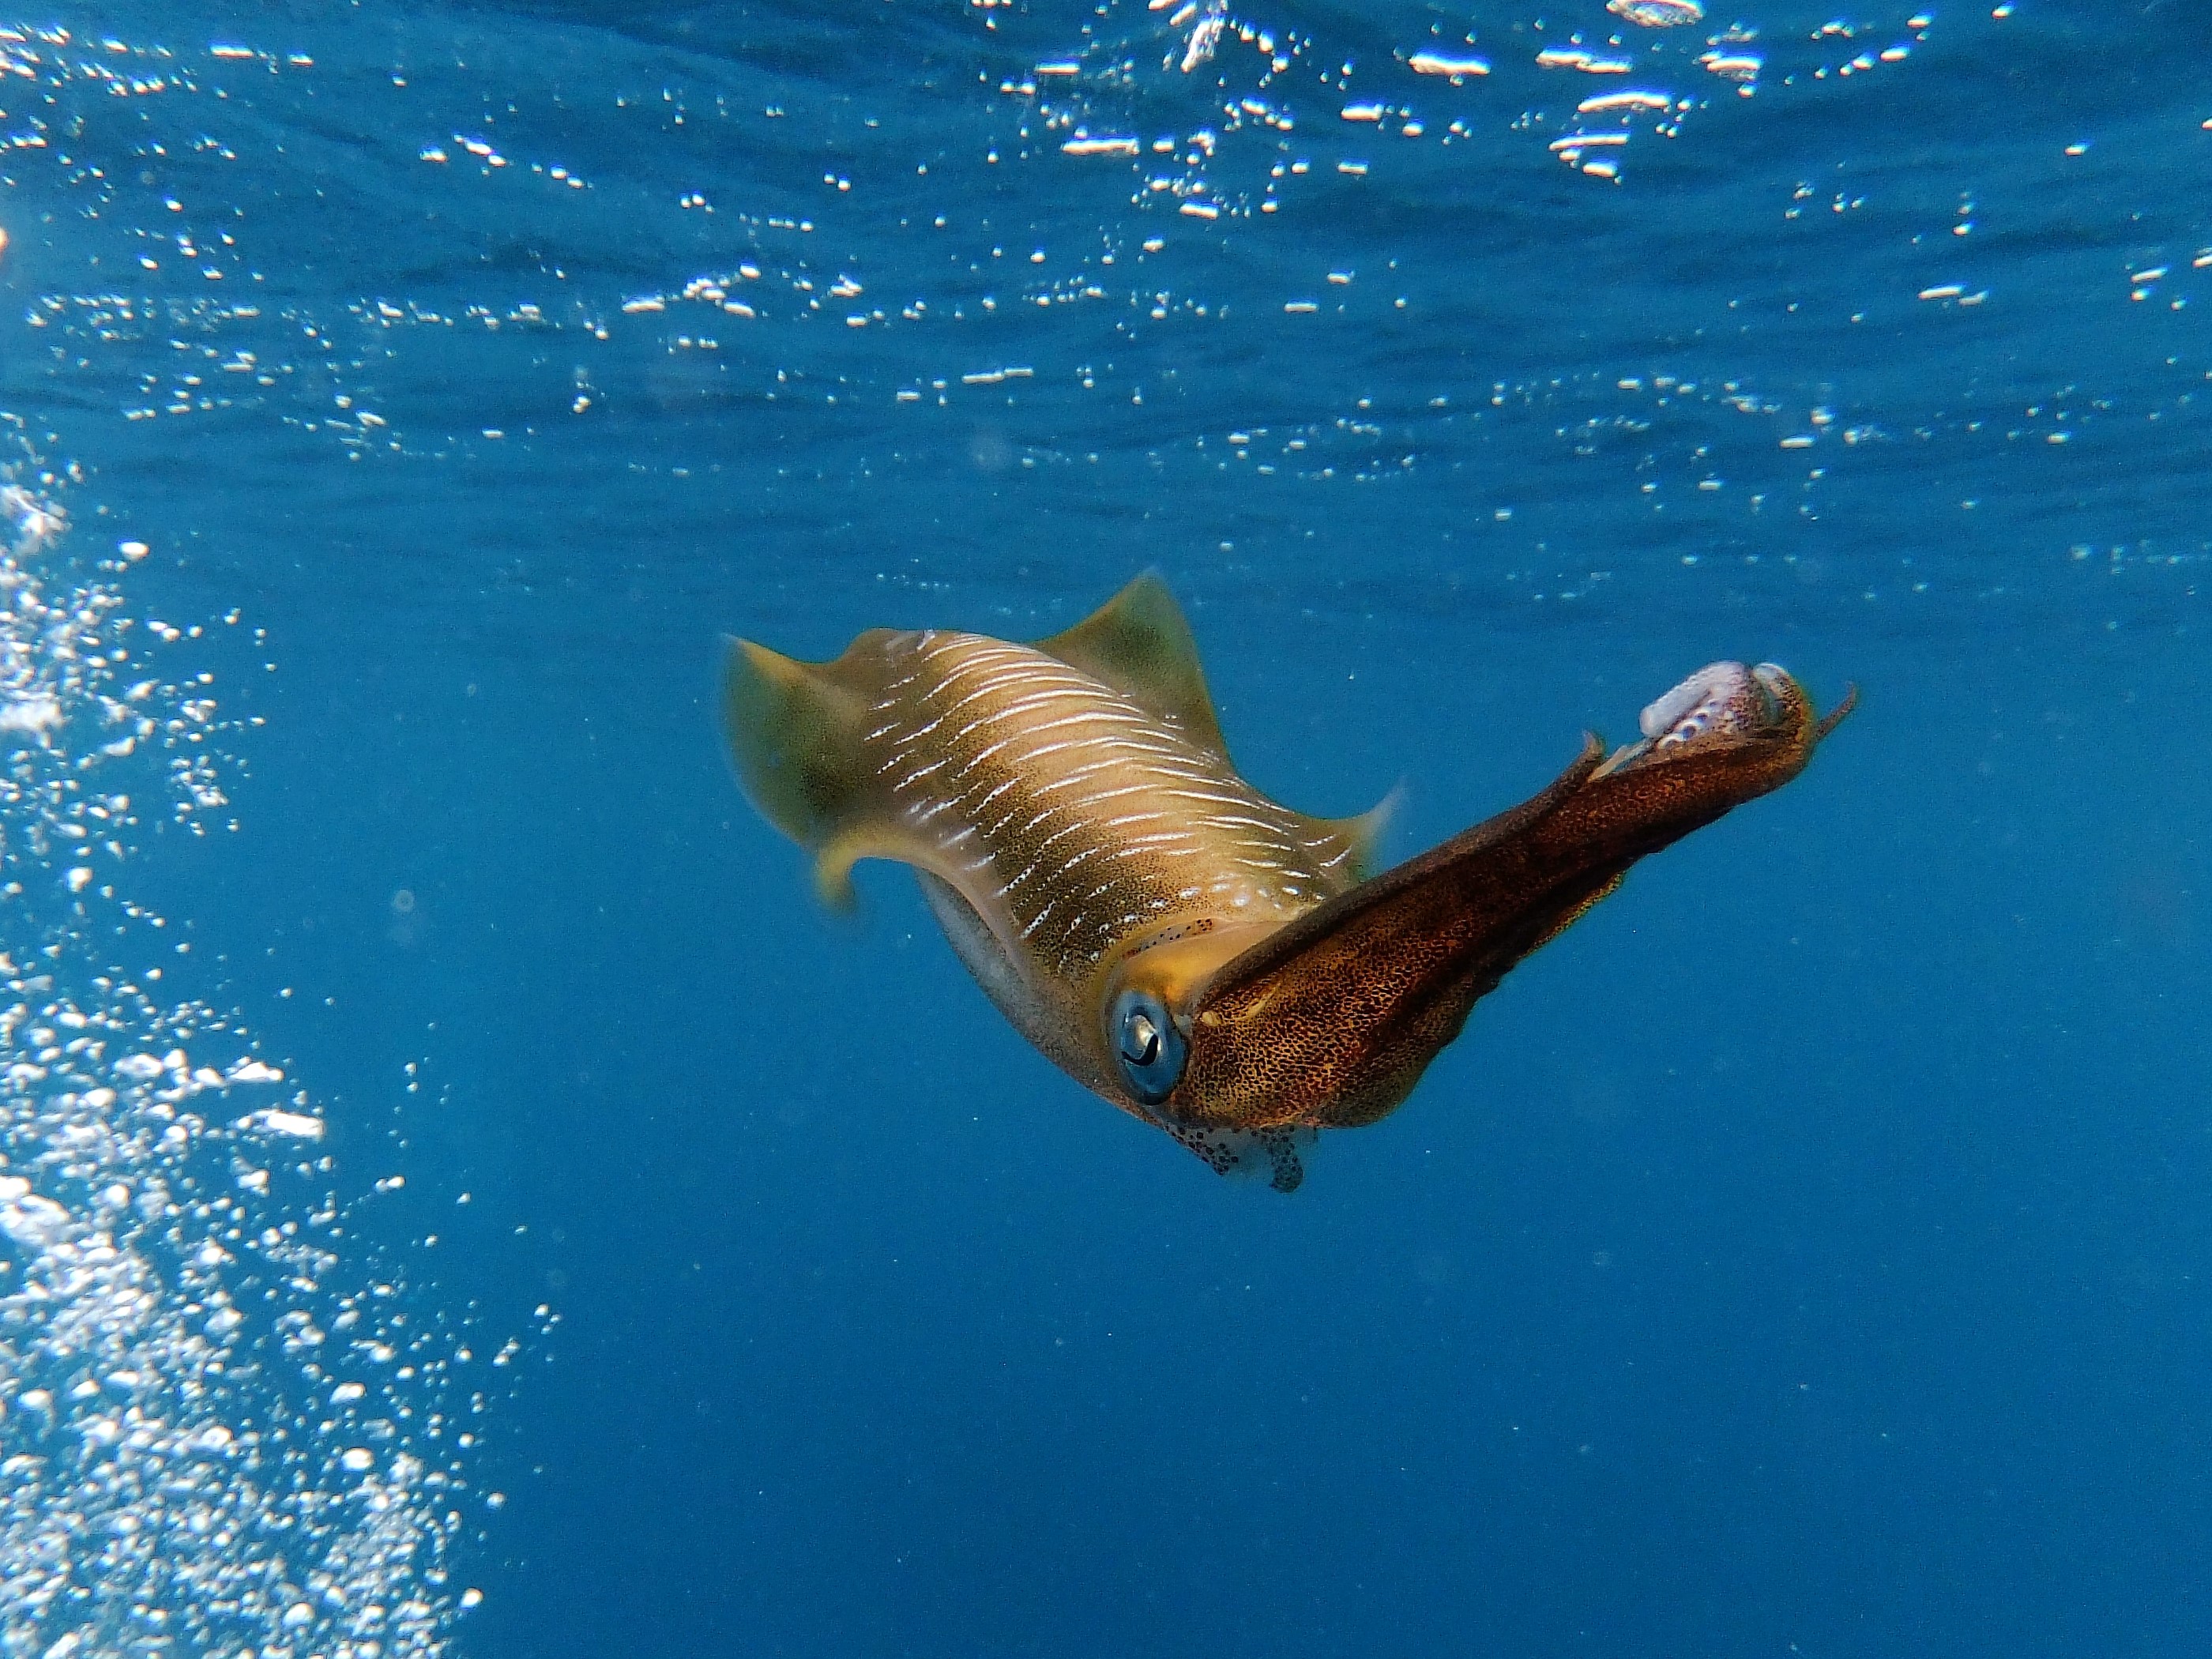 "Cuttlefish" by Sarah Turpin